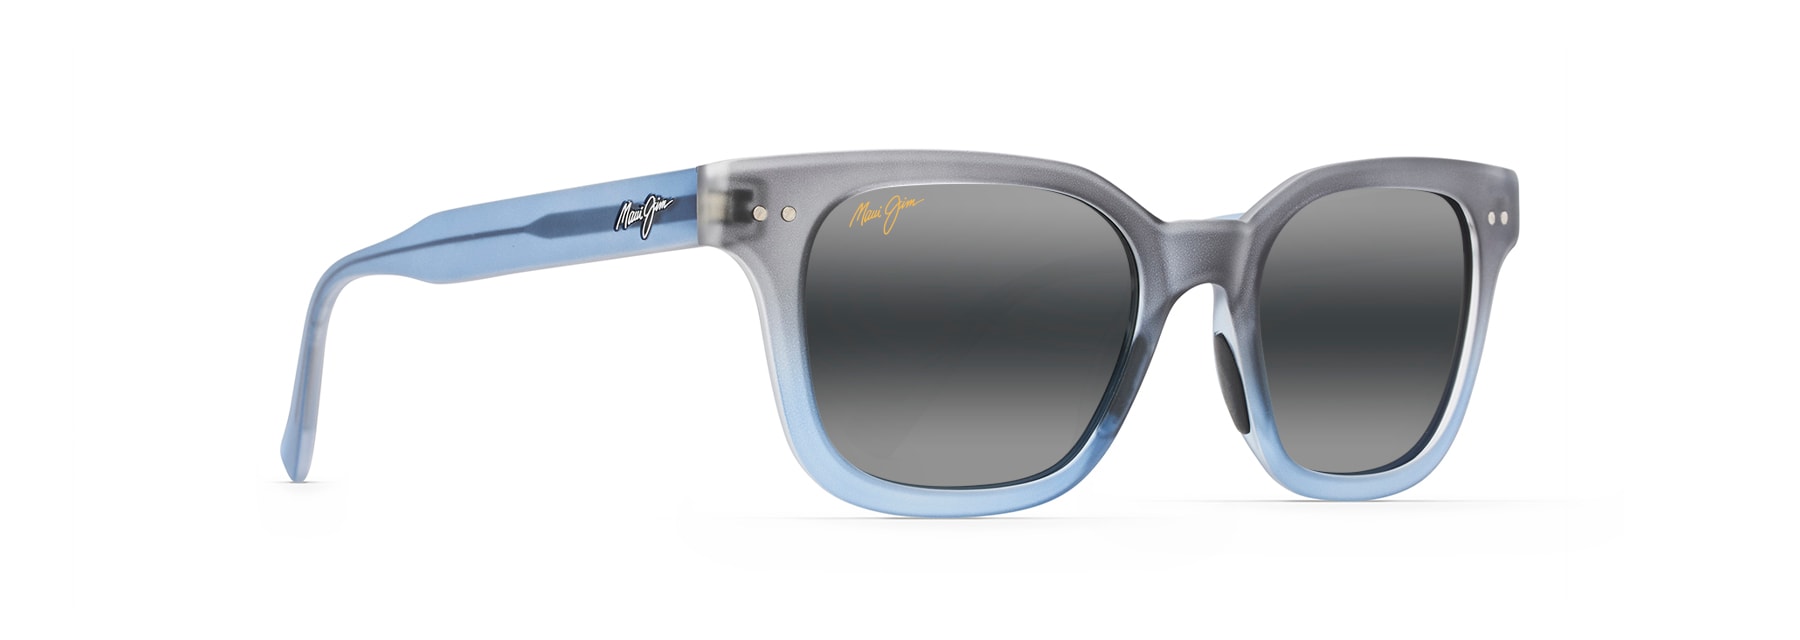 SHORE BREAK | Polarized Classic Sunglasses with SuperThin Glass